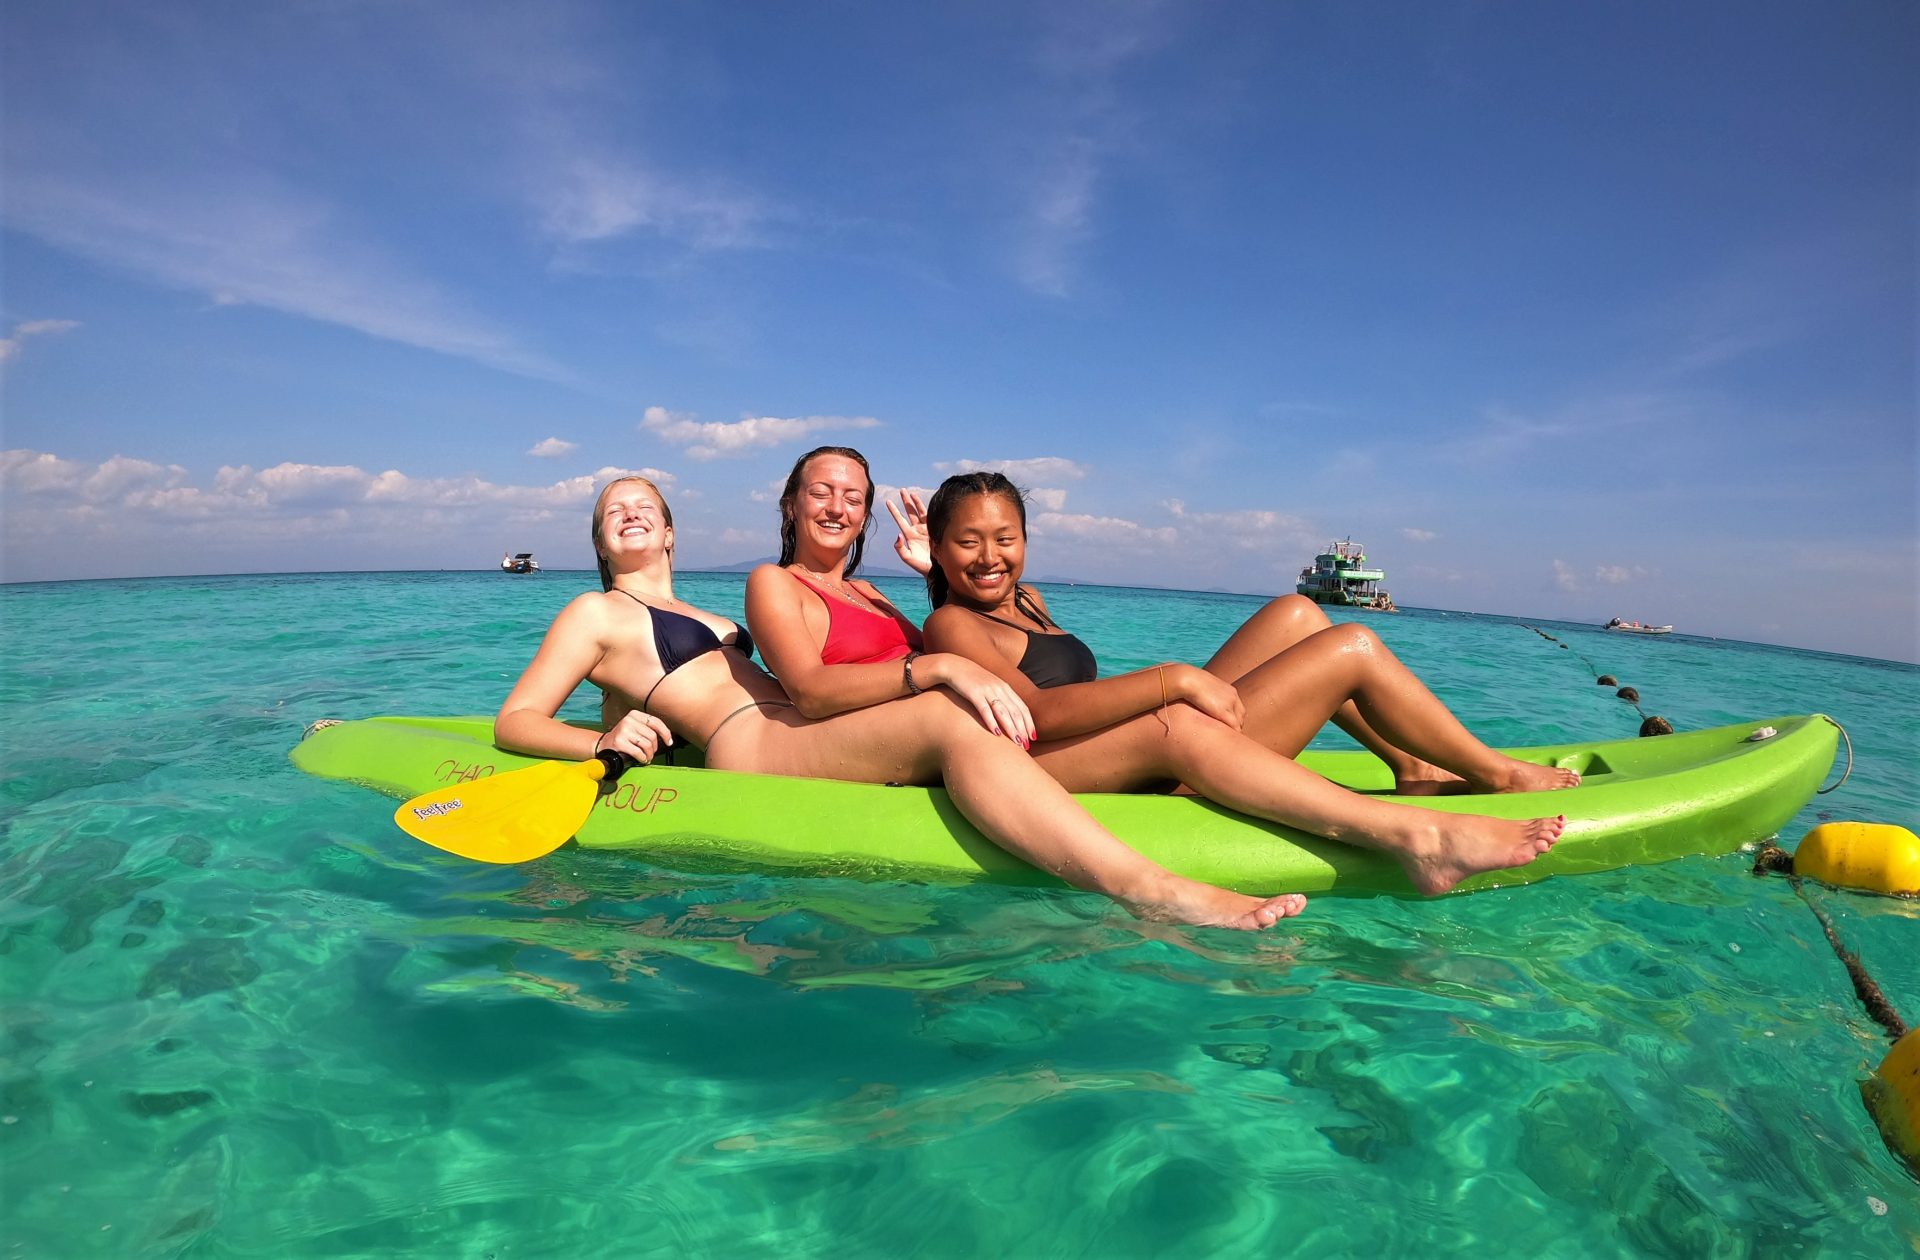 Tre jenter sit saman i ein kajakk på vatnet